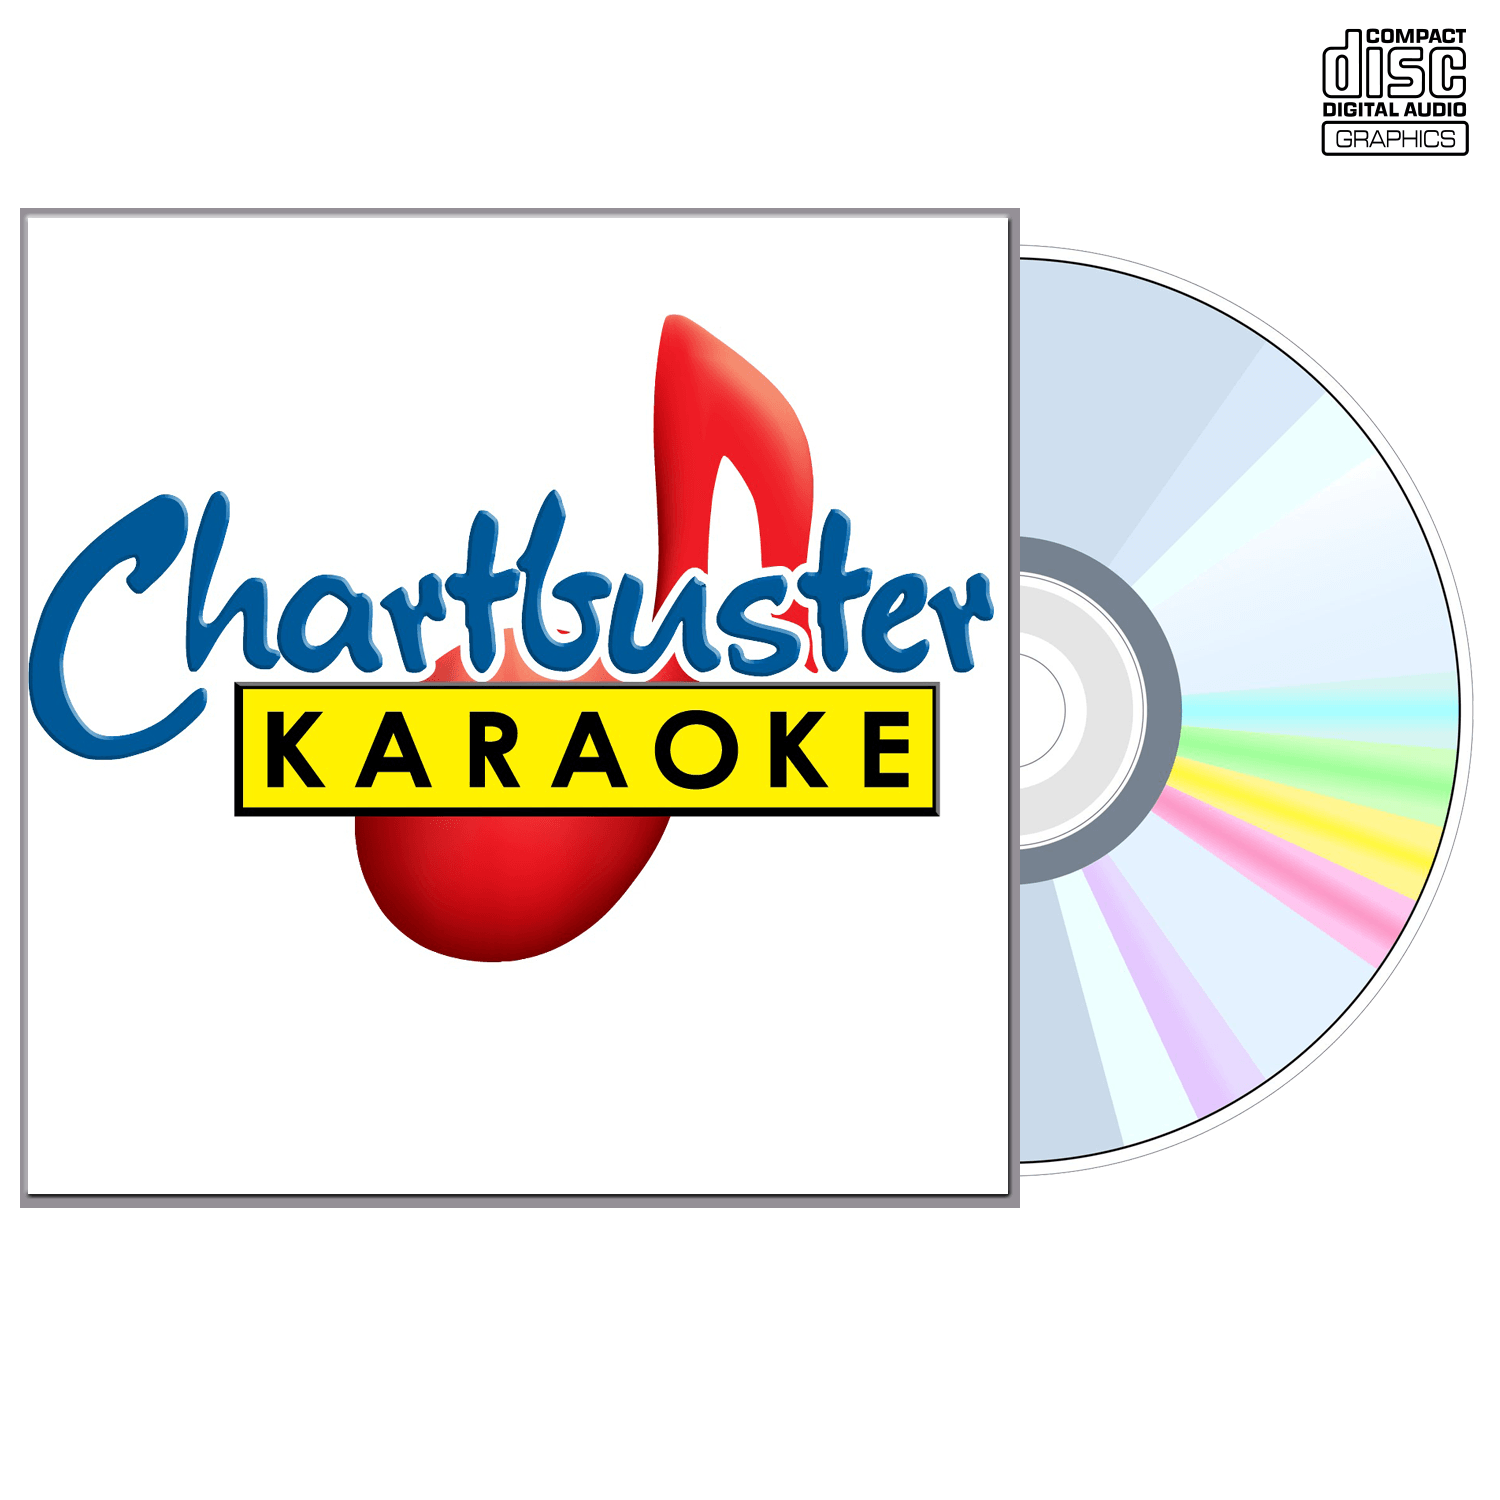 Radney Foster - CD+G - Chartbuster Karaoke - Karaoke Home Entertainment